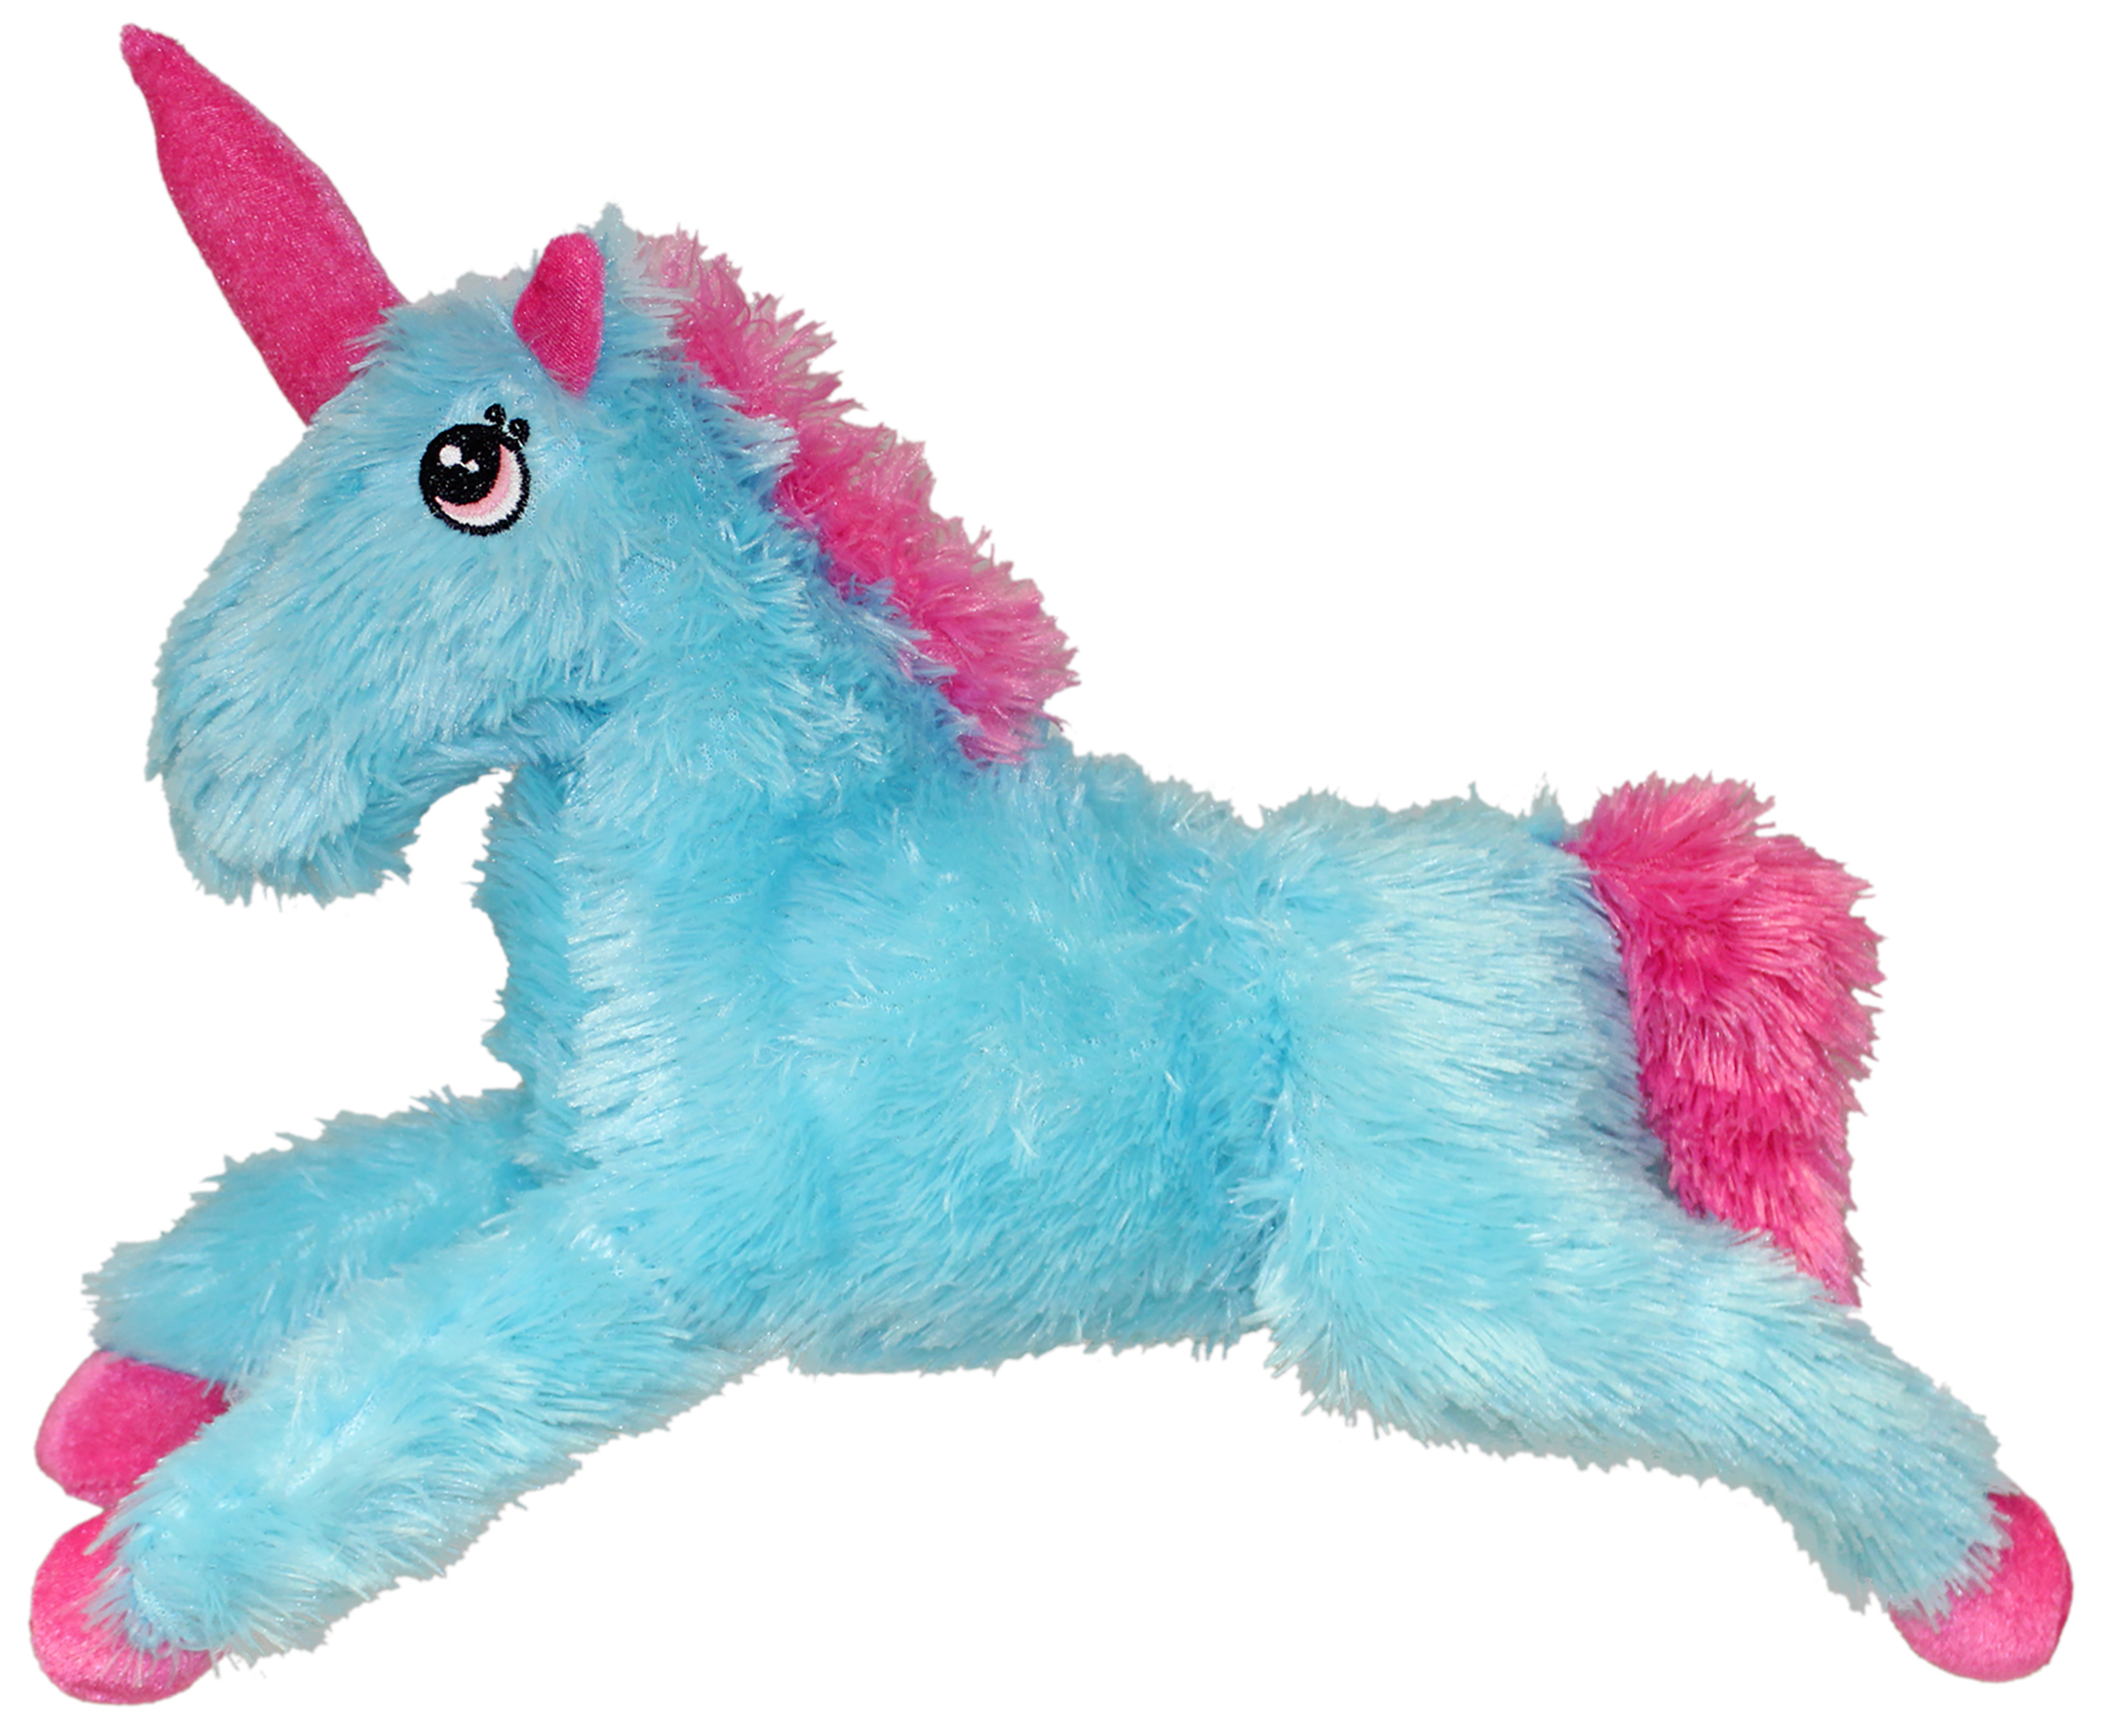 Plush Pal 22" Soft & Fluffy Blue Unicorn Stuffed Animal Toy - image 2 of 7